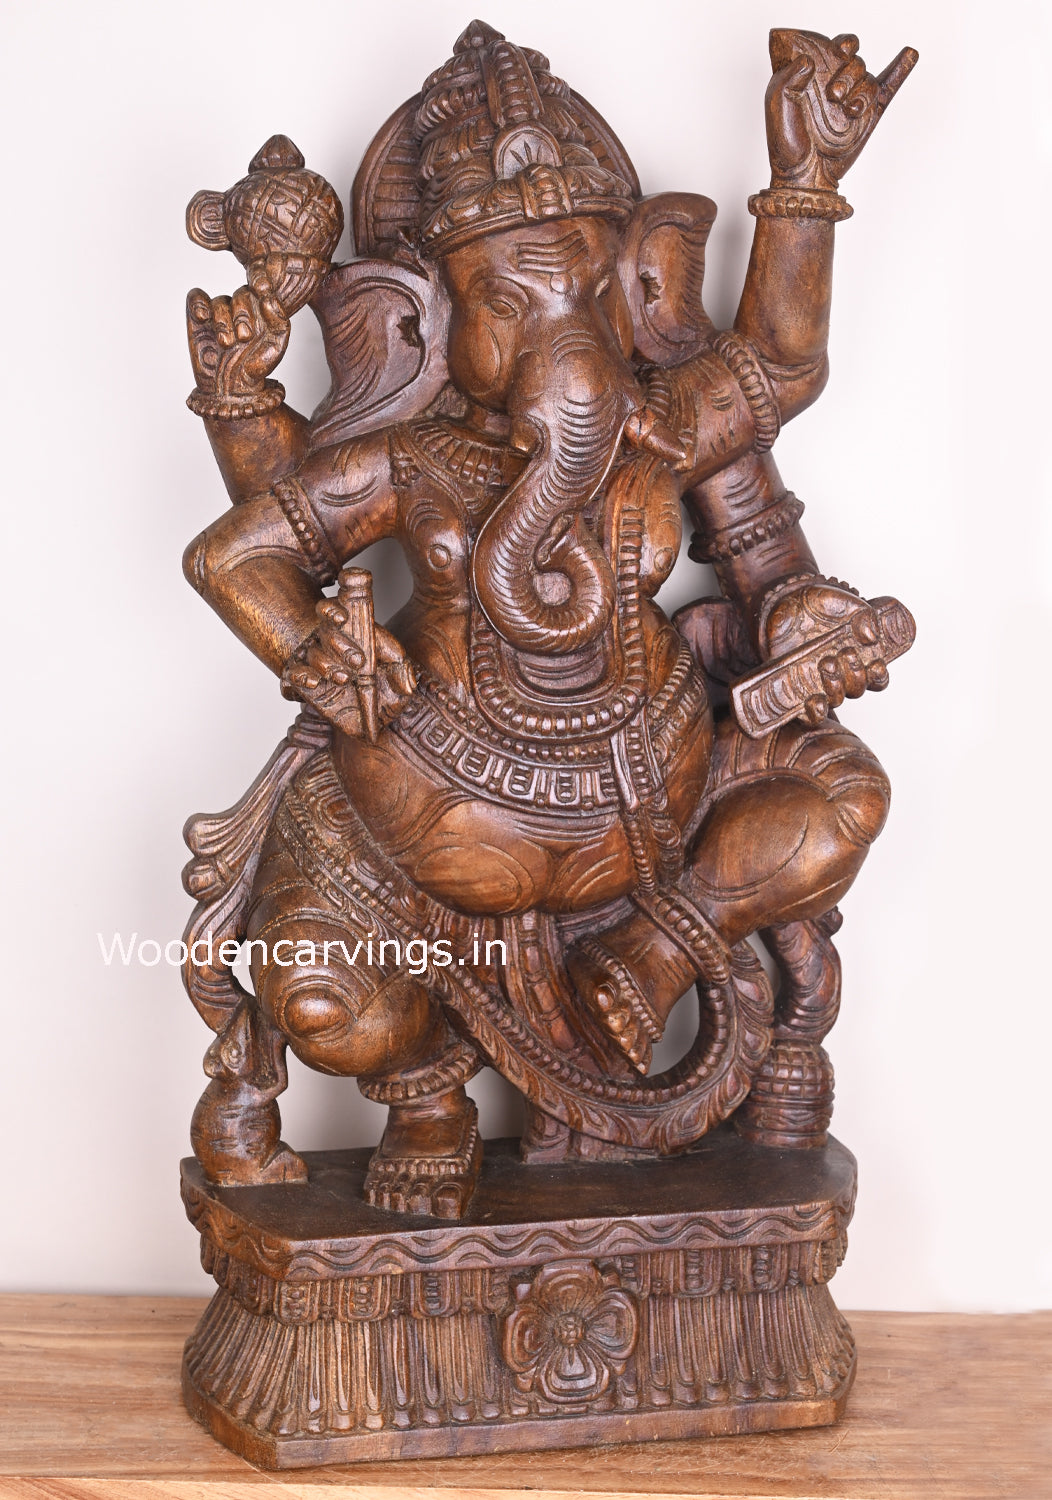 Dancing Lord Ganesha Holding Books, Writing nail, and Sweet Mothak Wooden Handmade Sculpture 35"